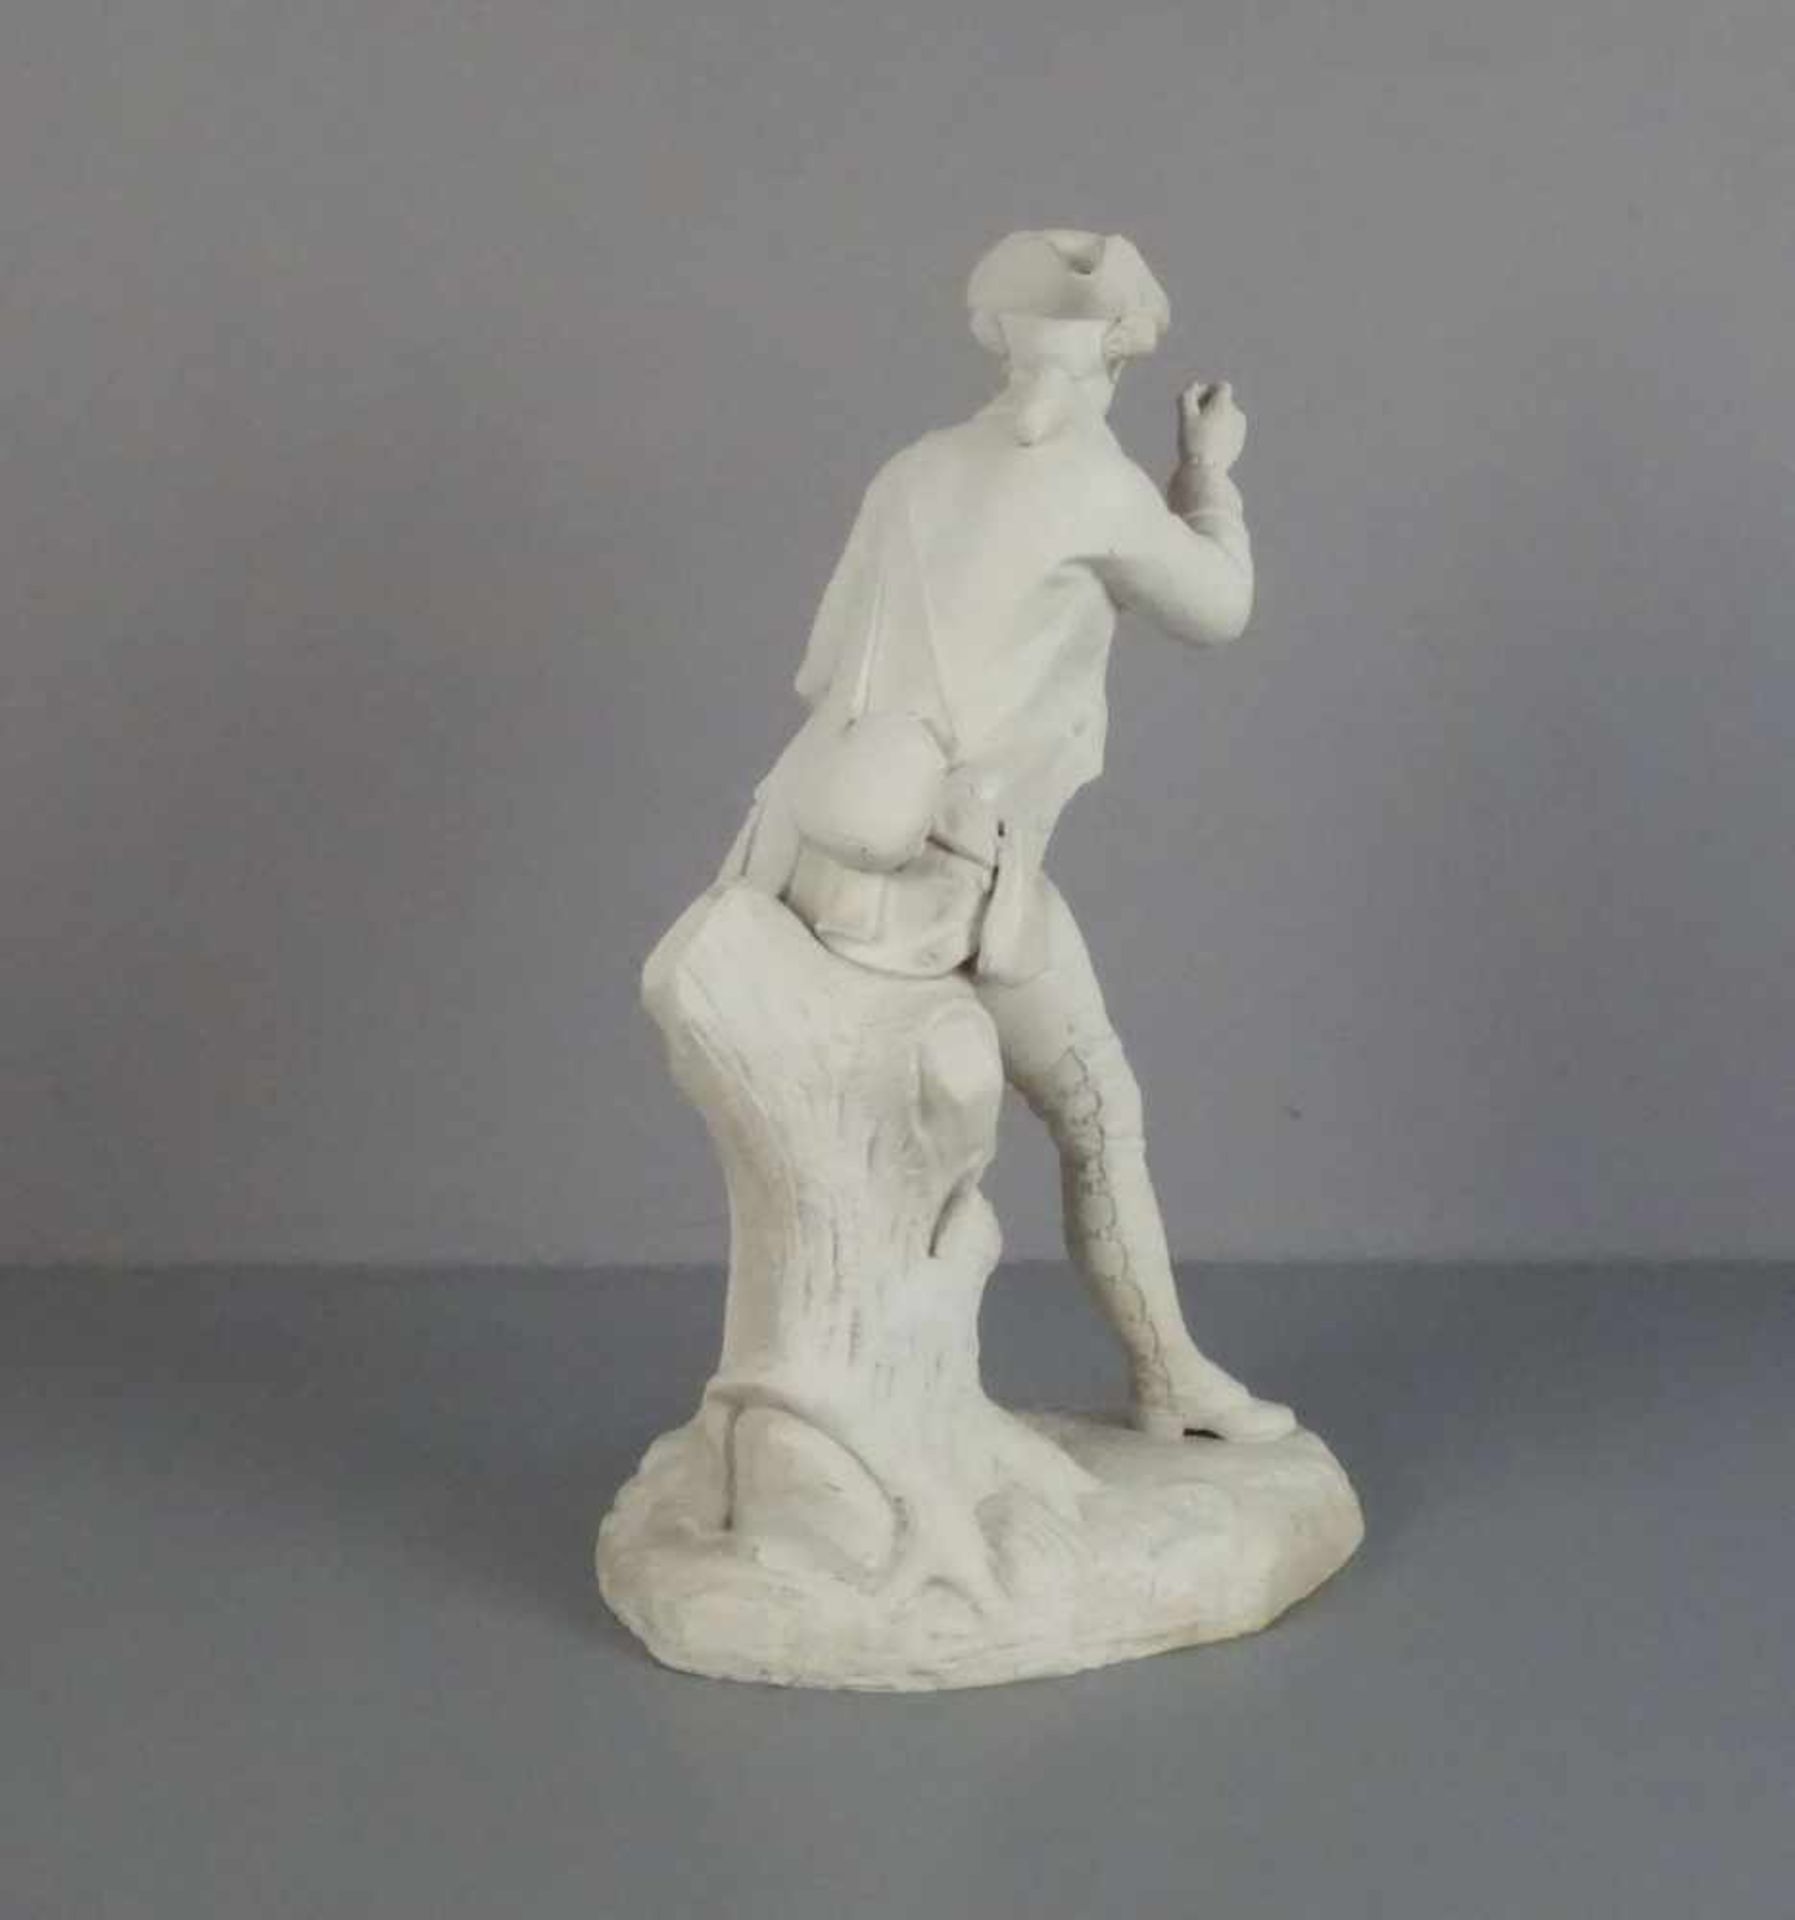 SEVRES TAFELAUFSATZ / JAGDLICHE FIGUR: "HUNDEFÜHRER" / "JÄGER" / porcelain figure "hunter", - Image 3 of 6